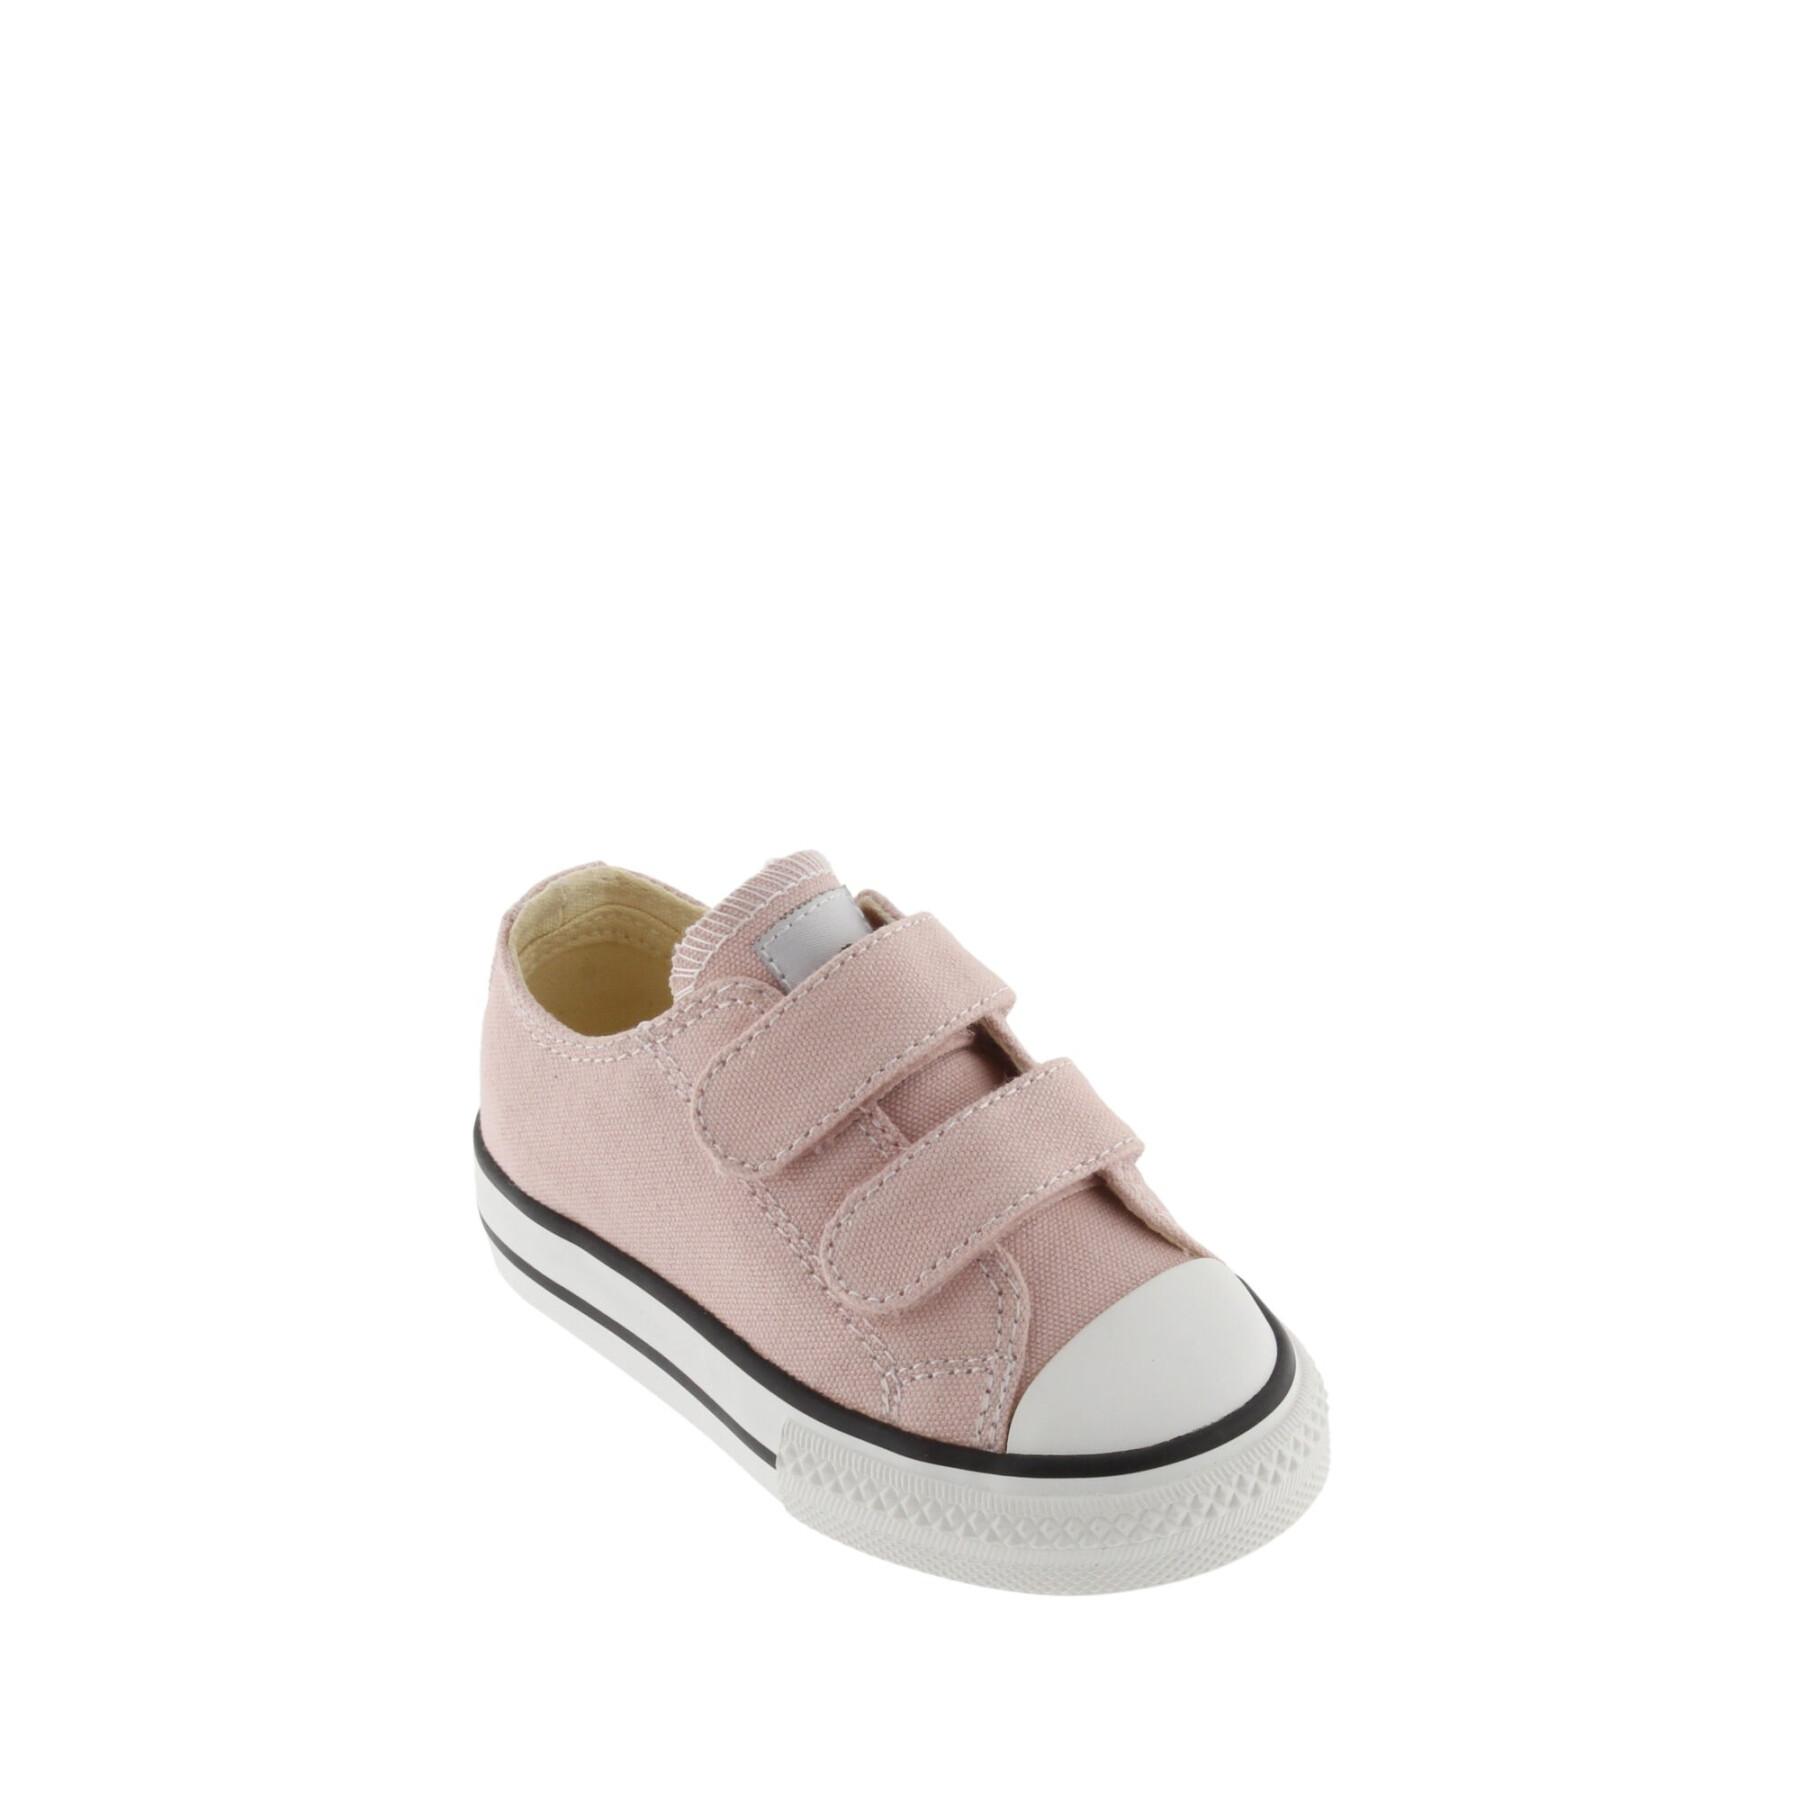 Baby sneakers Victoria en toile